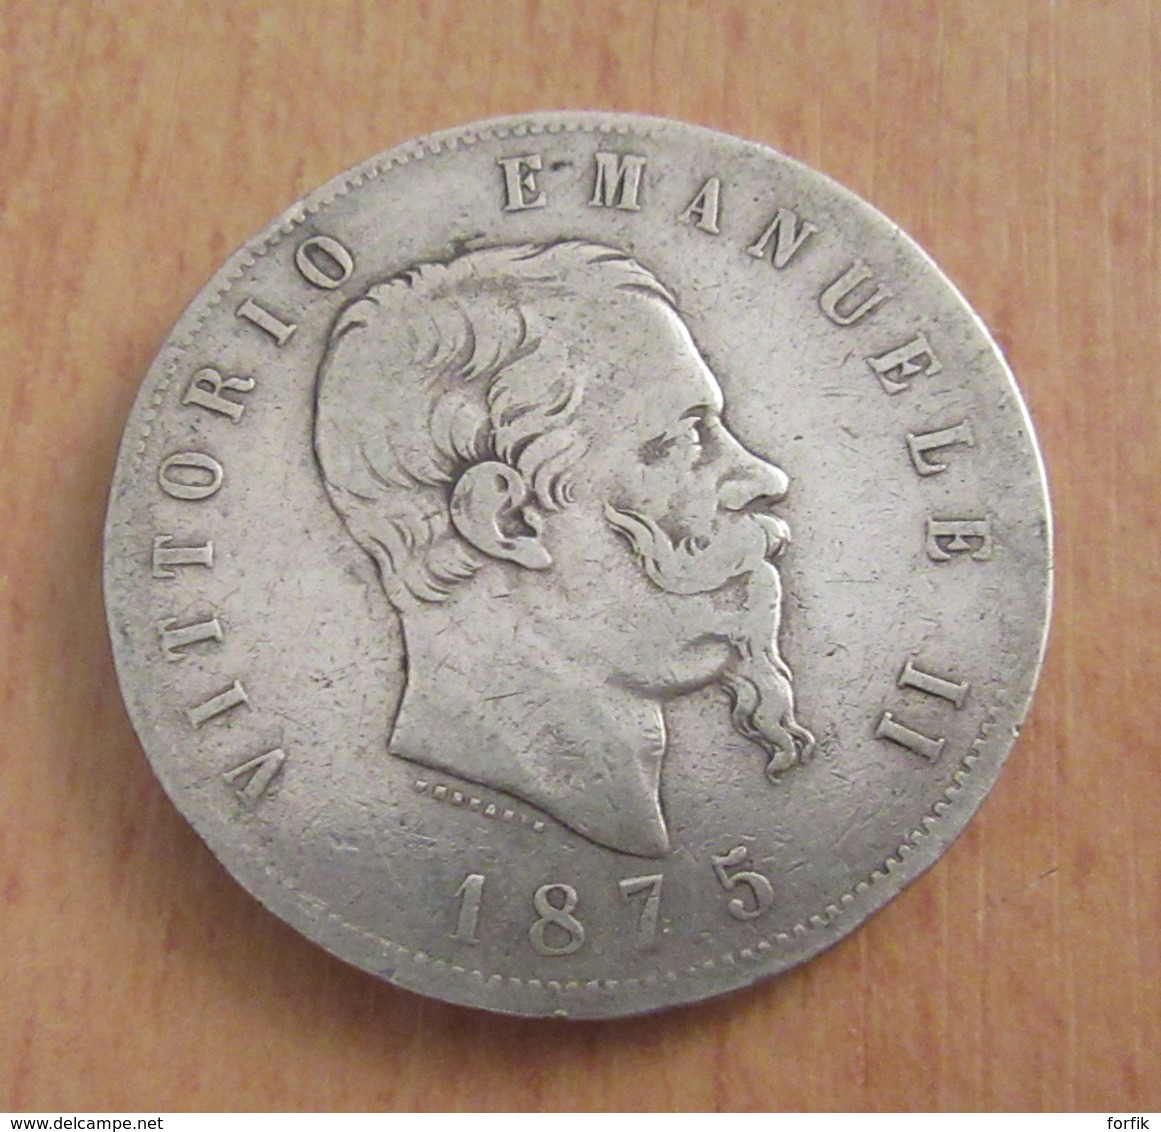 Italie - Monnaie 5 Lira (Lire) En Argent Vittorio Emanuele II 1875 M - 1861-1878 : Victor Emmanuel II